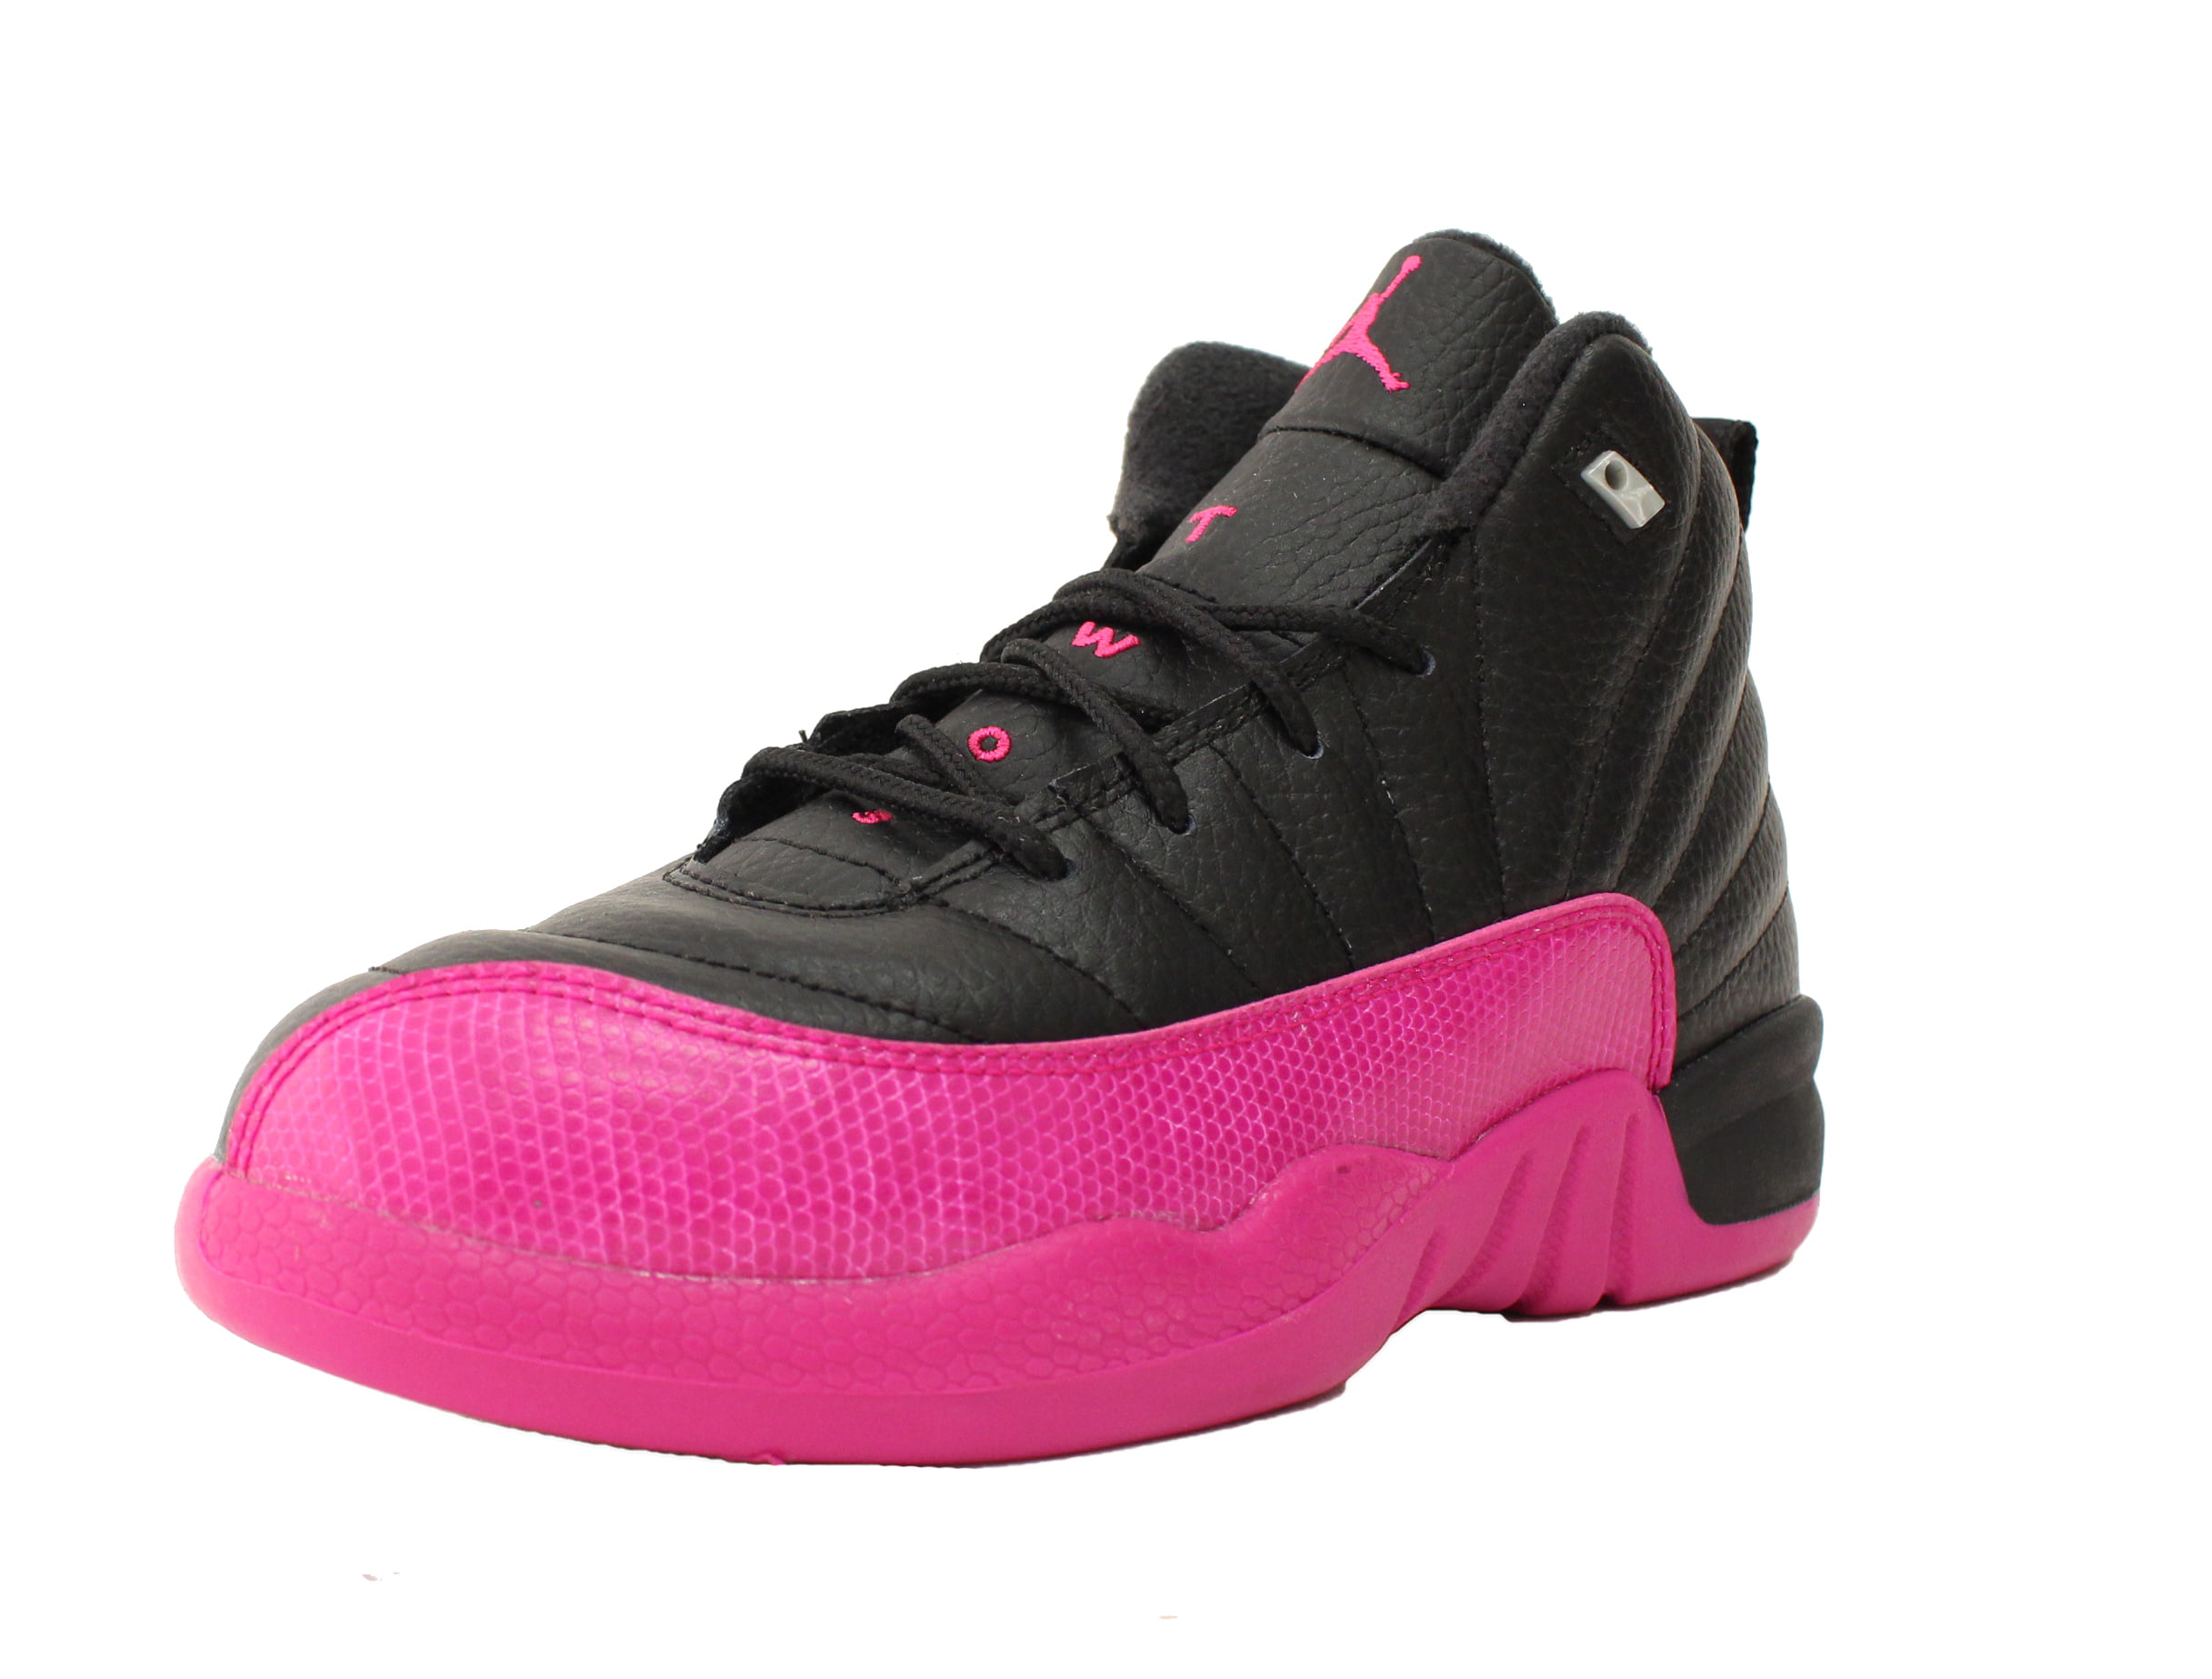 New Black and Pink Air Jordan 12s Dropping Next Week